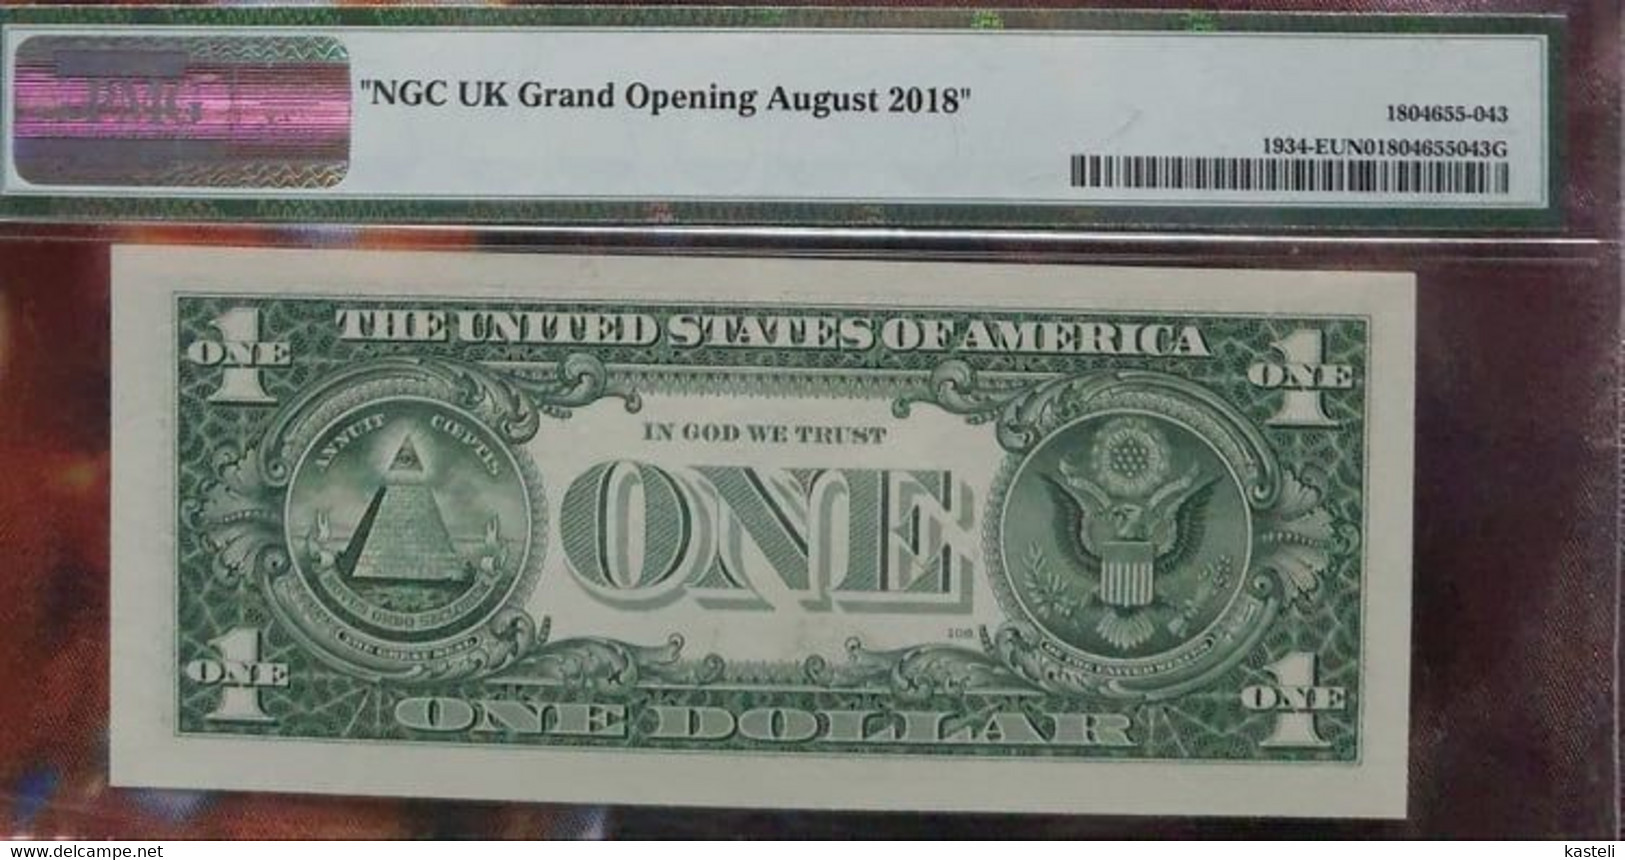 USA  United States Of America  1 $  2009 - United States Notes (1928-1953)